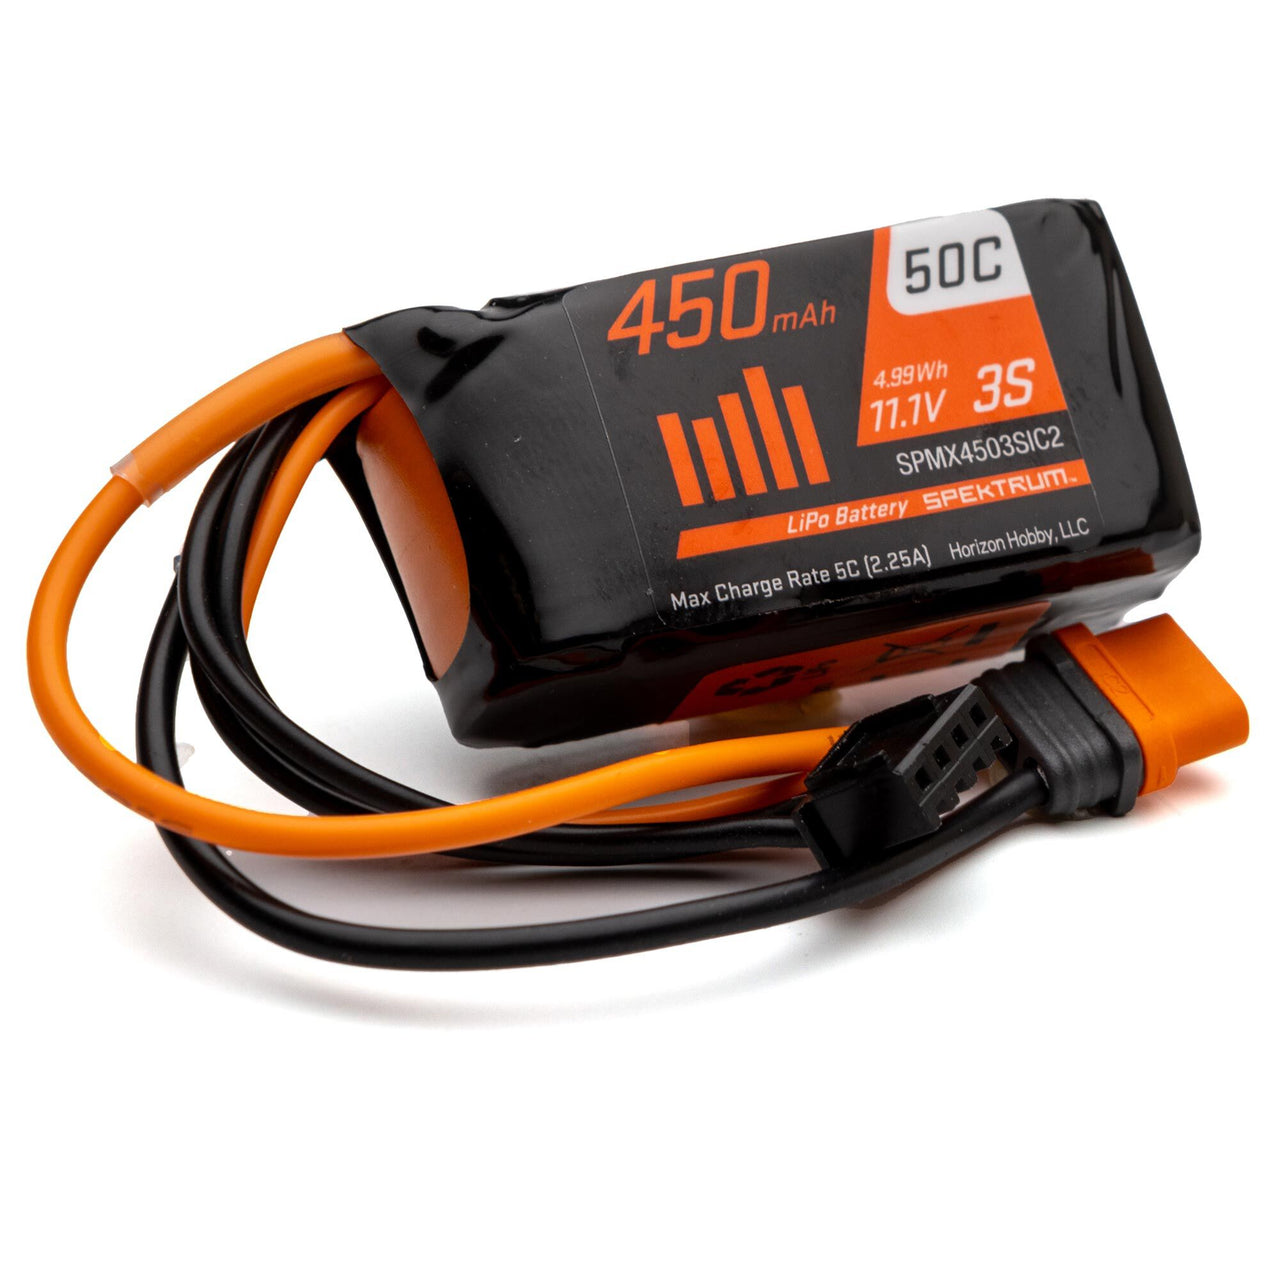 SPMX4503SIC2 11.1V 450mAh 3S 50C LiPo Battery: IC2